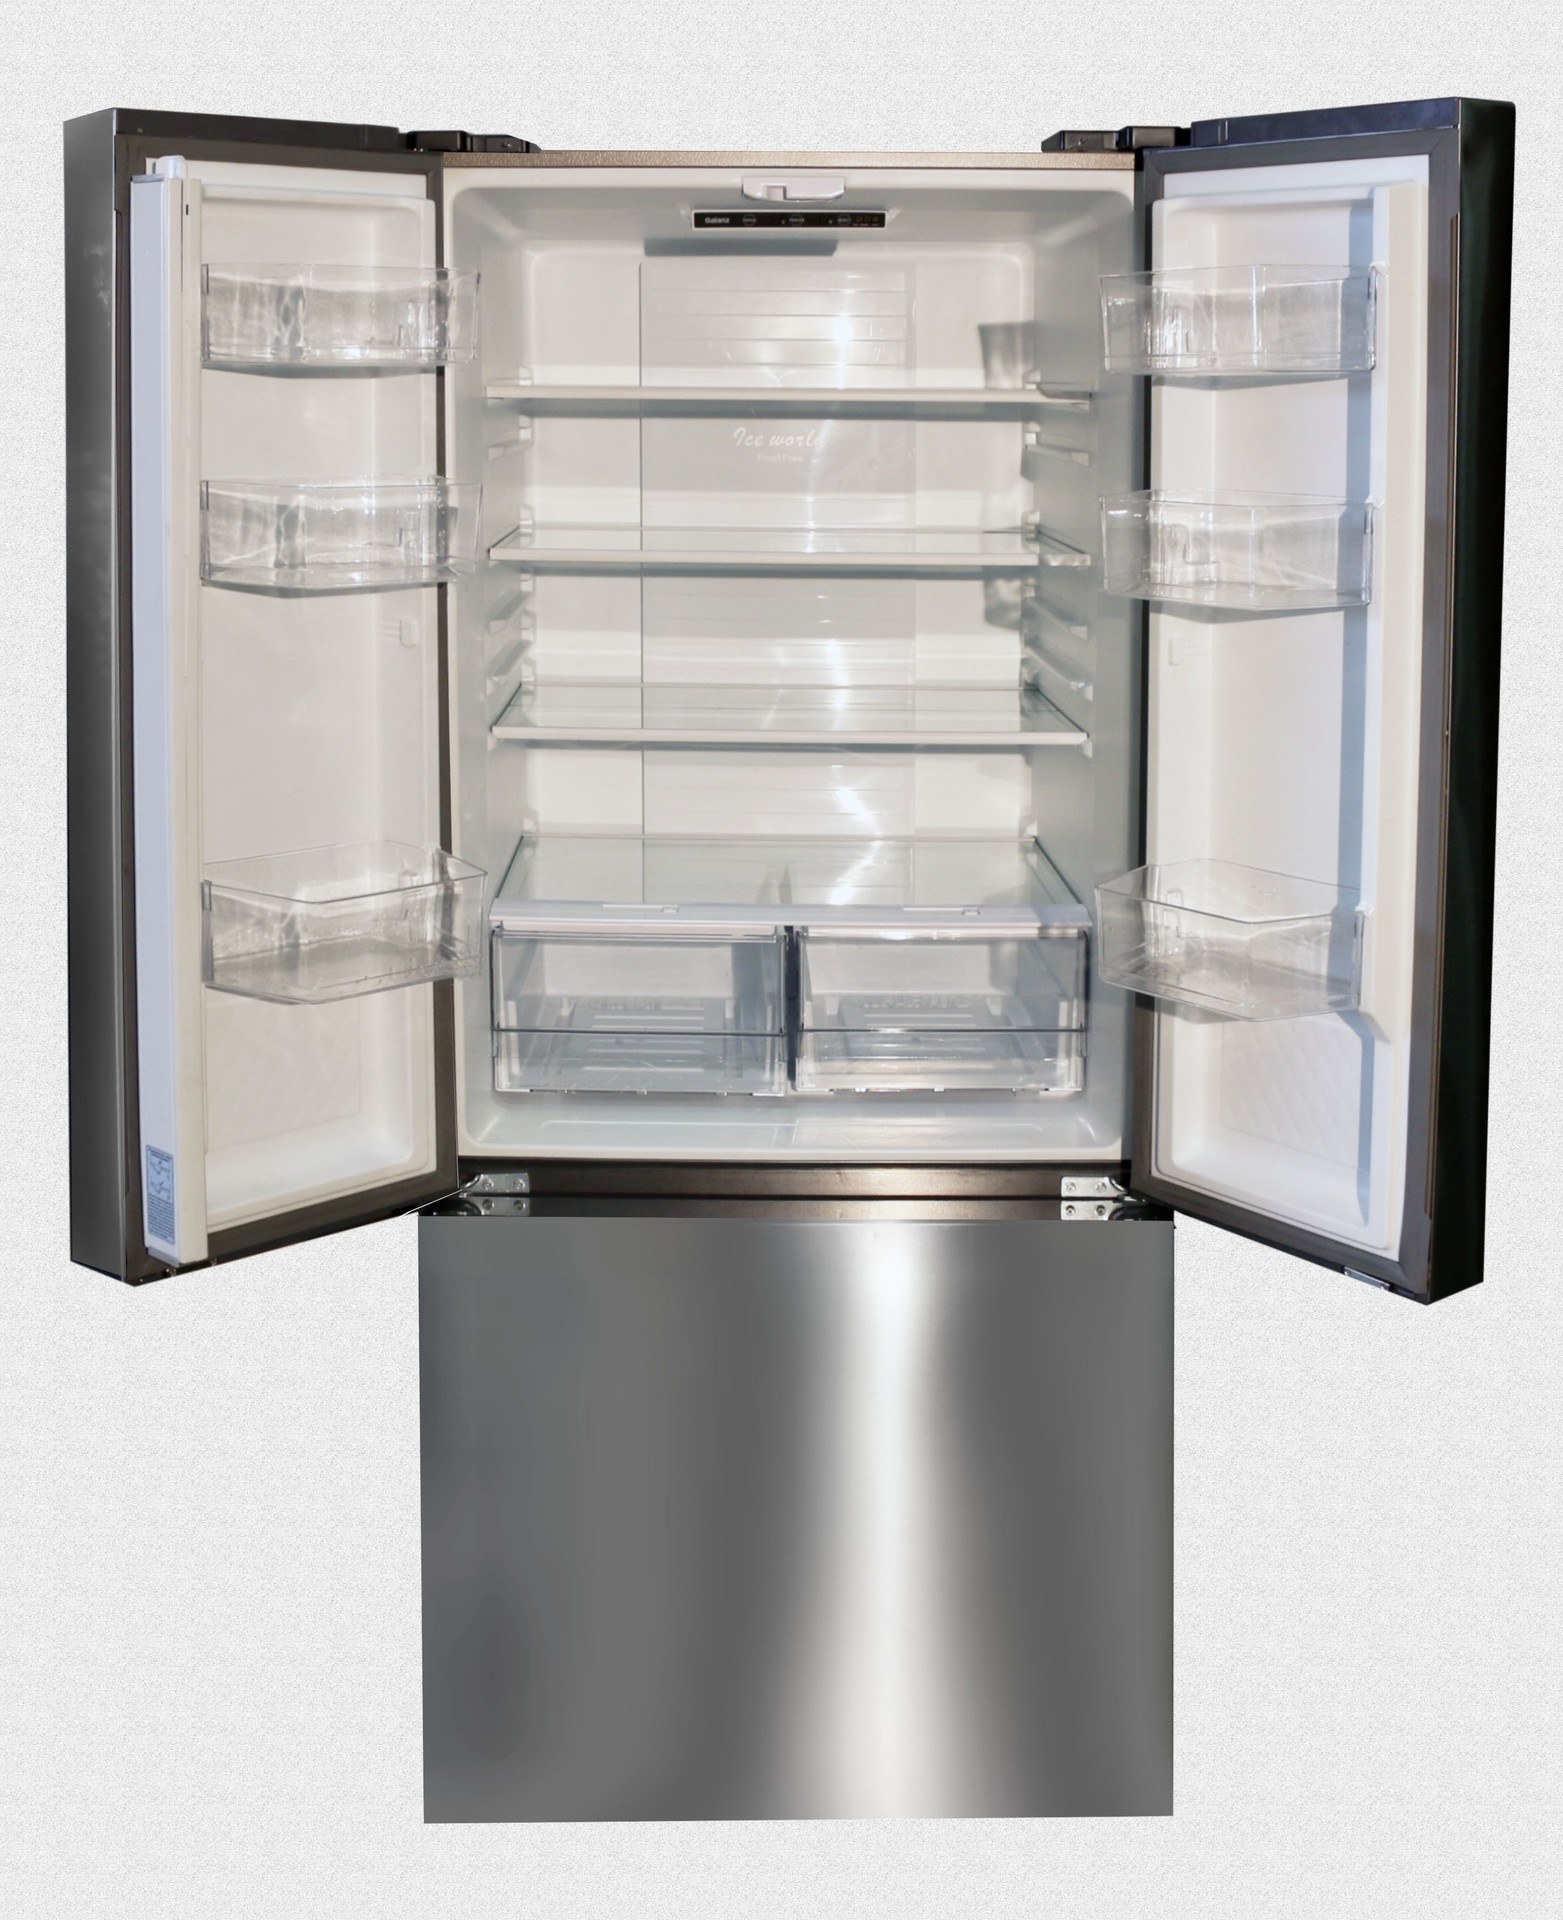 https://www.rvnews.com/wp-content/uploads/2020/07/Way-17-cu-ft-12V-fridge-1-scaled.jpg